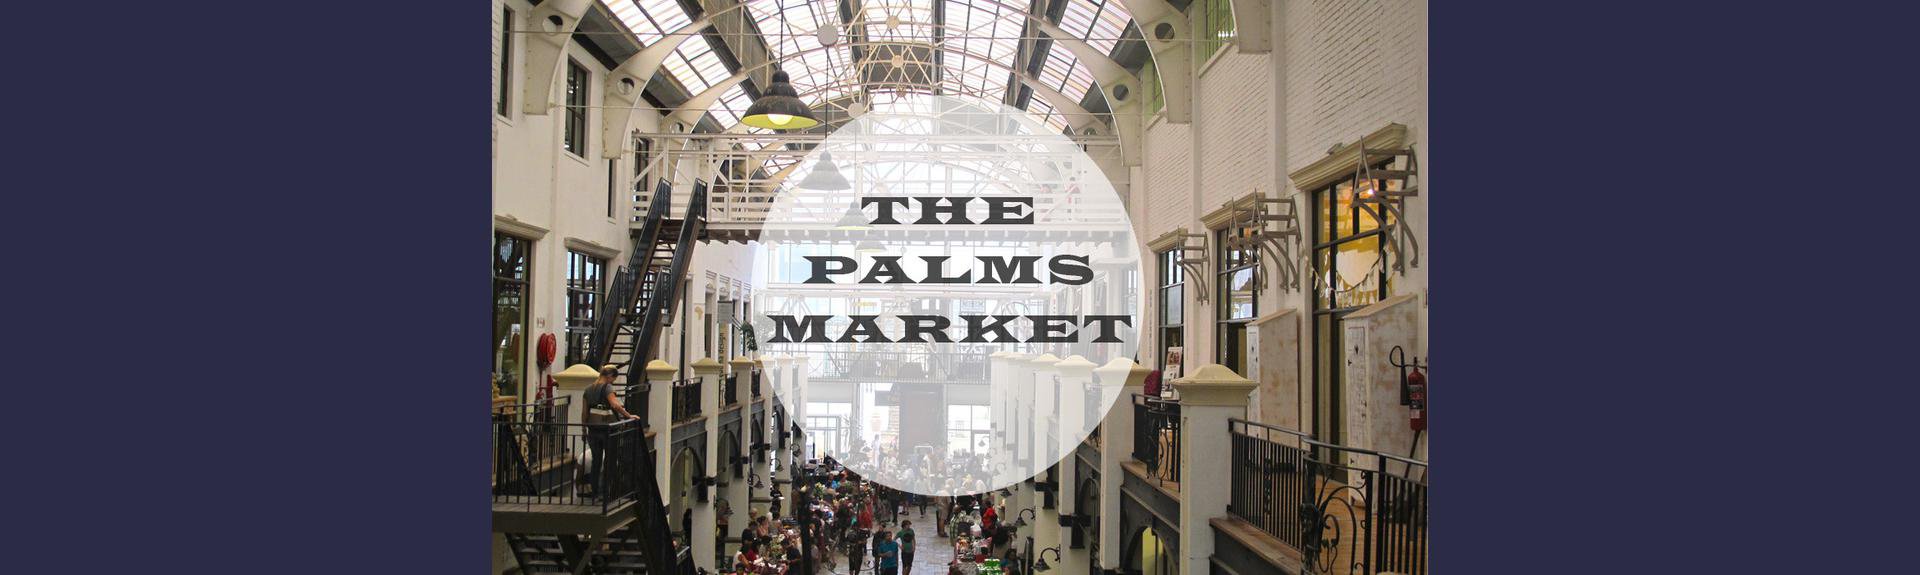 the palms market platteland market